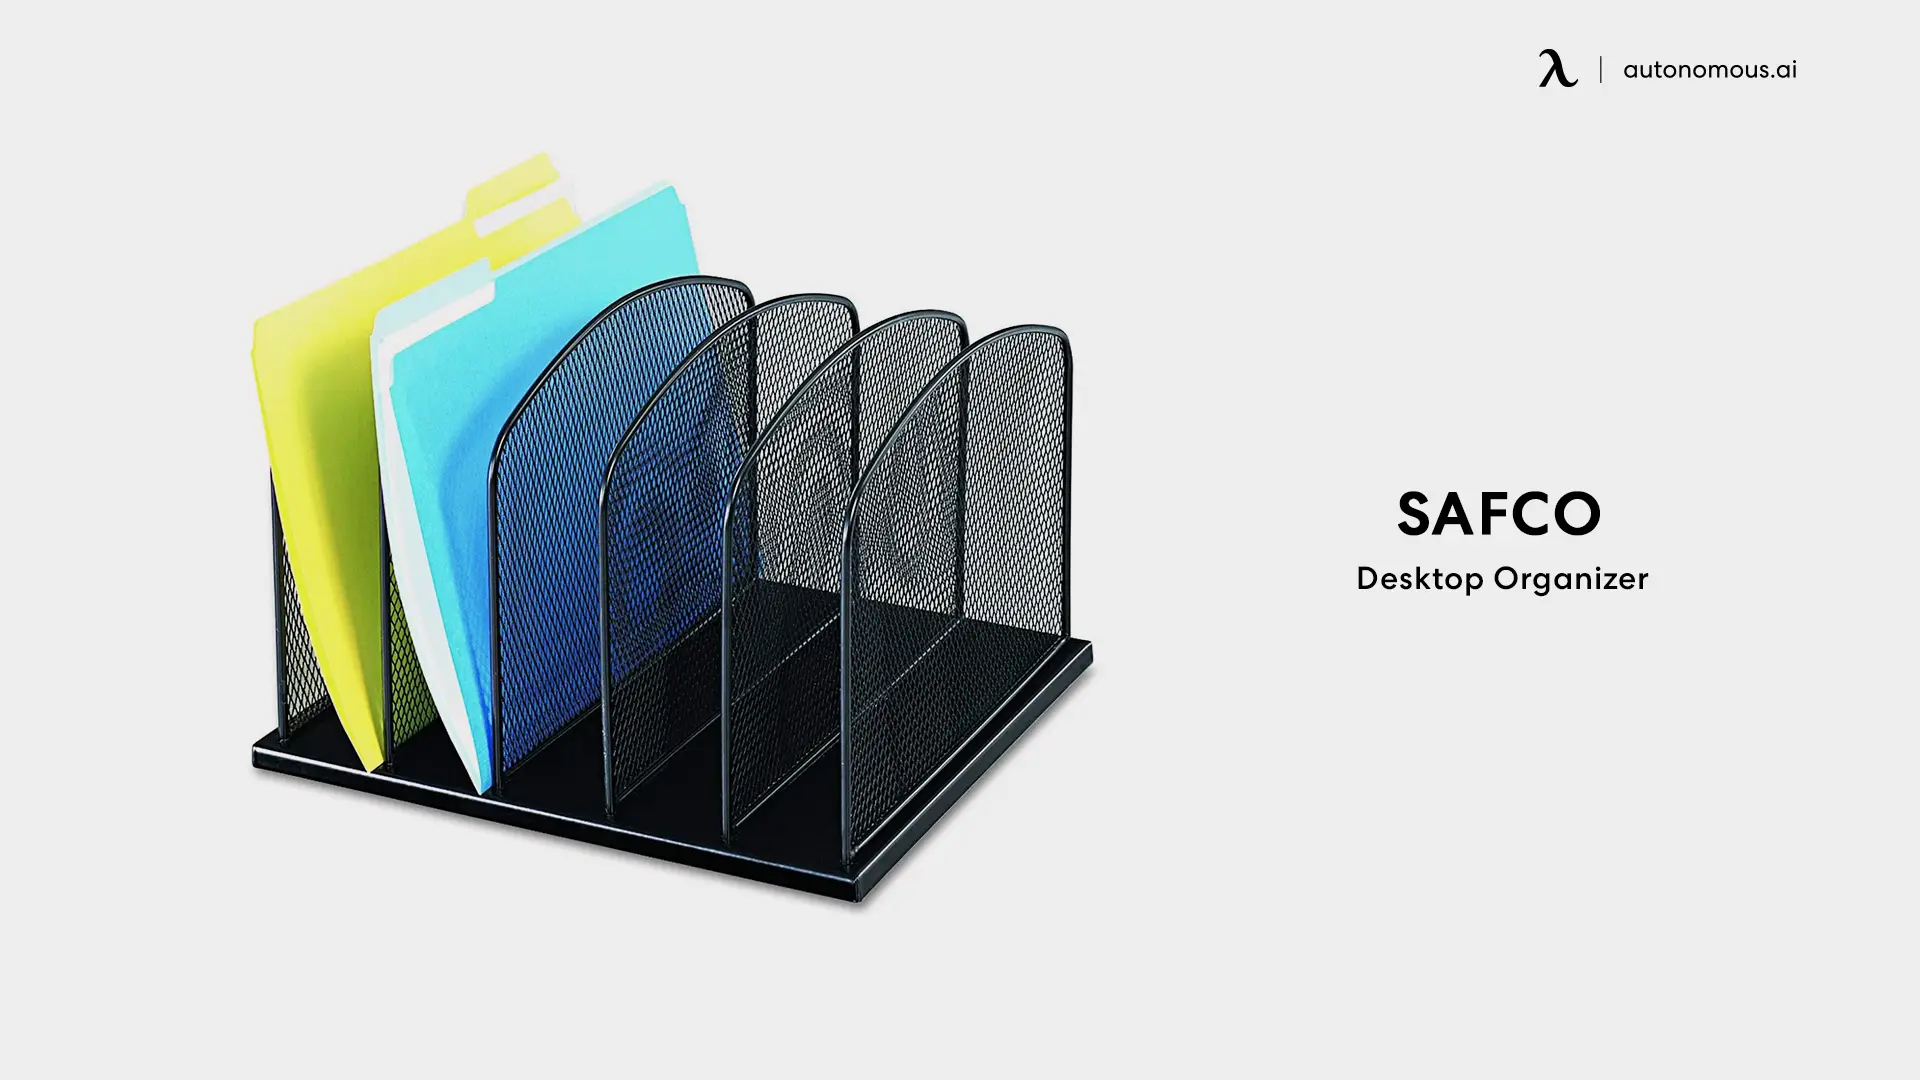 Safco Desktop Organizer - secret santa gift ideas